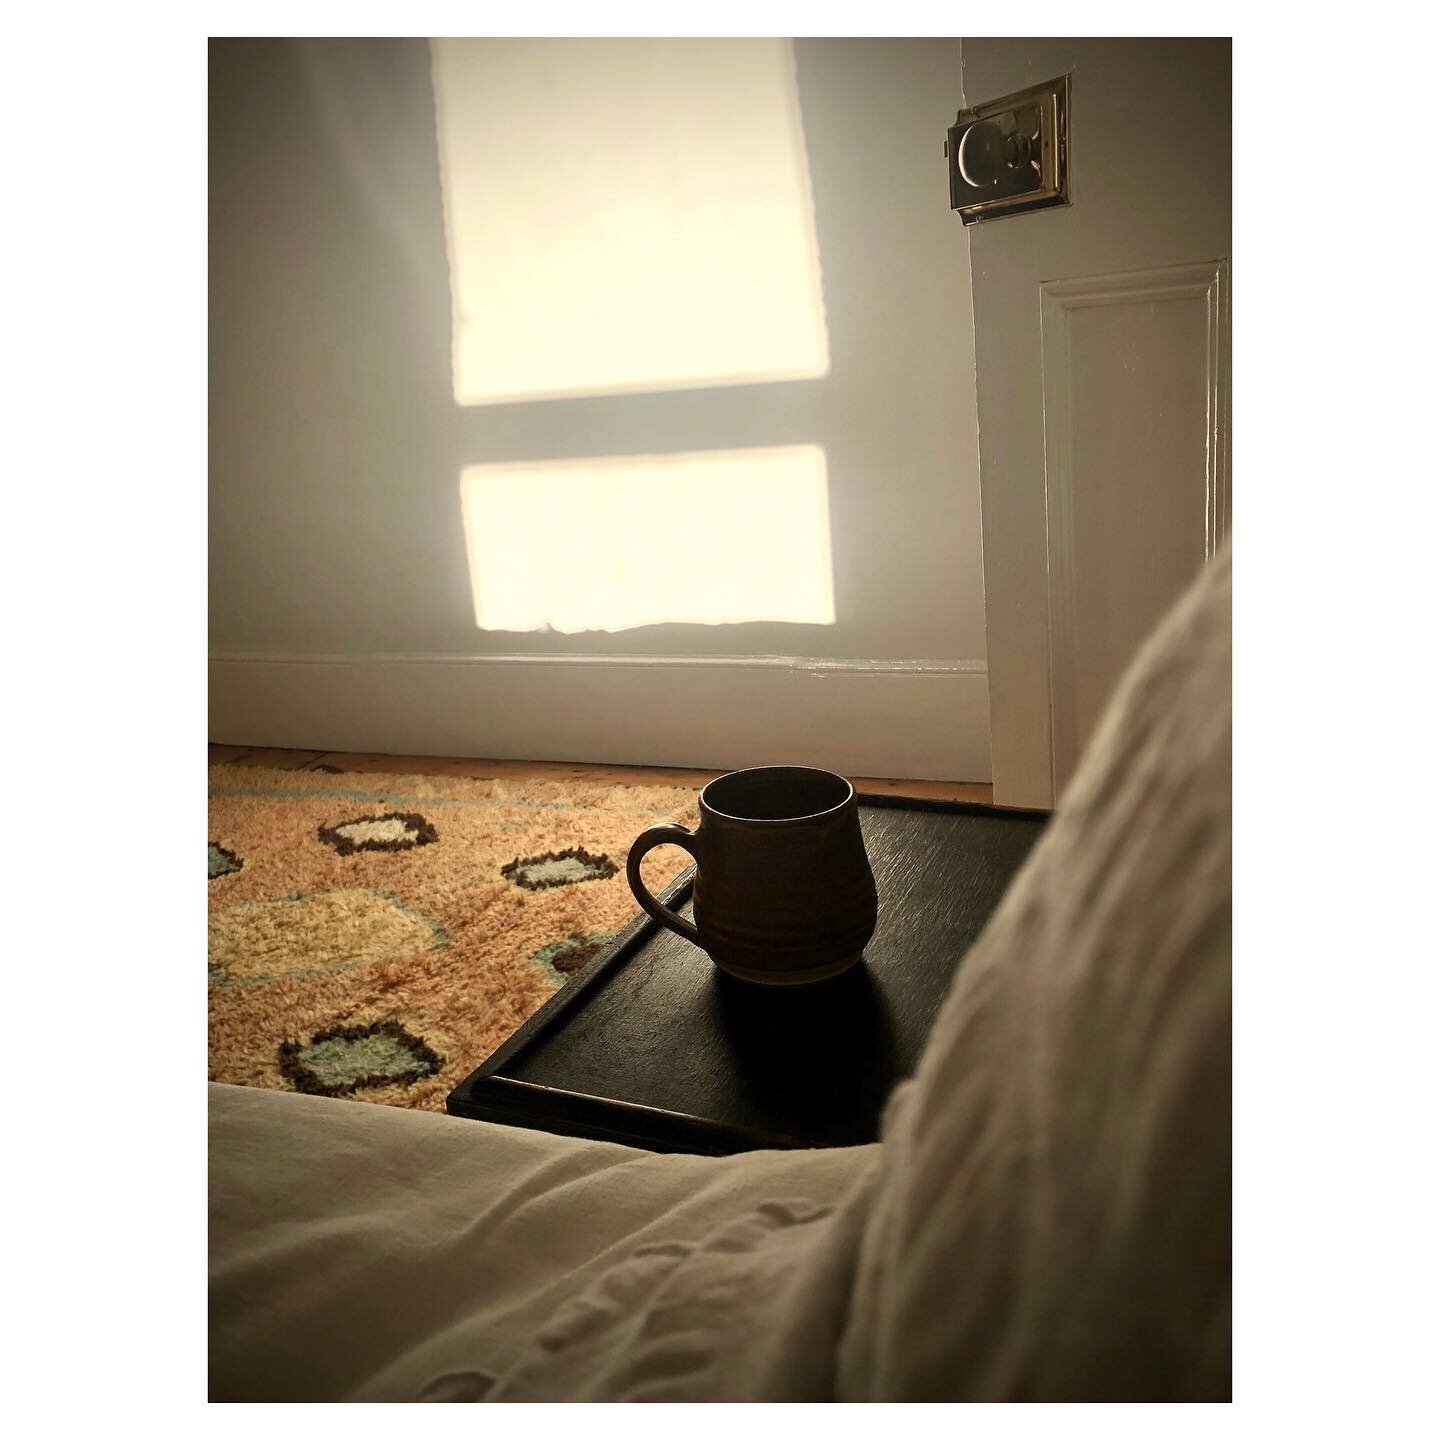 Morning
.
.
.
#calmspace #quietmoments #slowliving #naturalhome #visitmargate #guesthouse #holidayrental #margatecreatives #margatebeach #wabisabi #slowlived #softminimalism #slowandsimpledays #retreat #kinfolkhome #interiors #interiordesign #morning